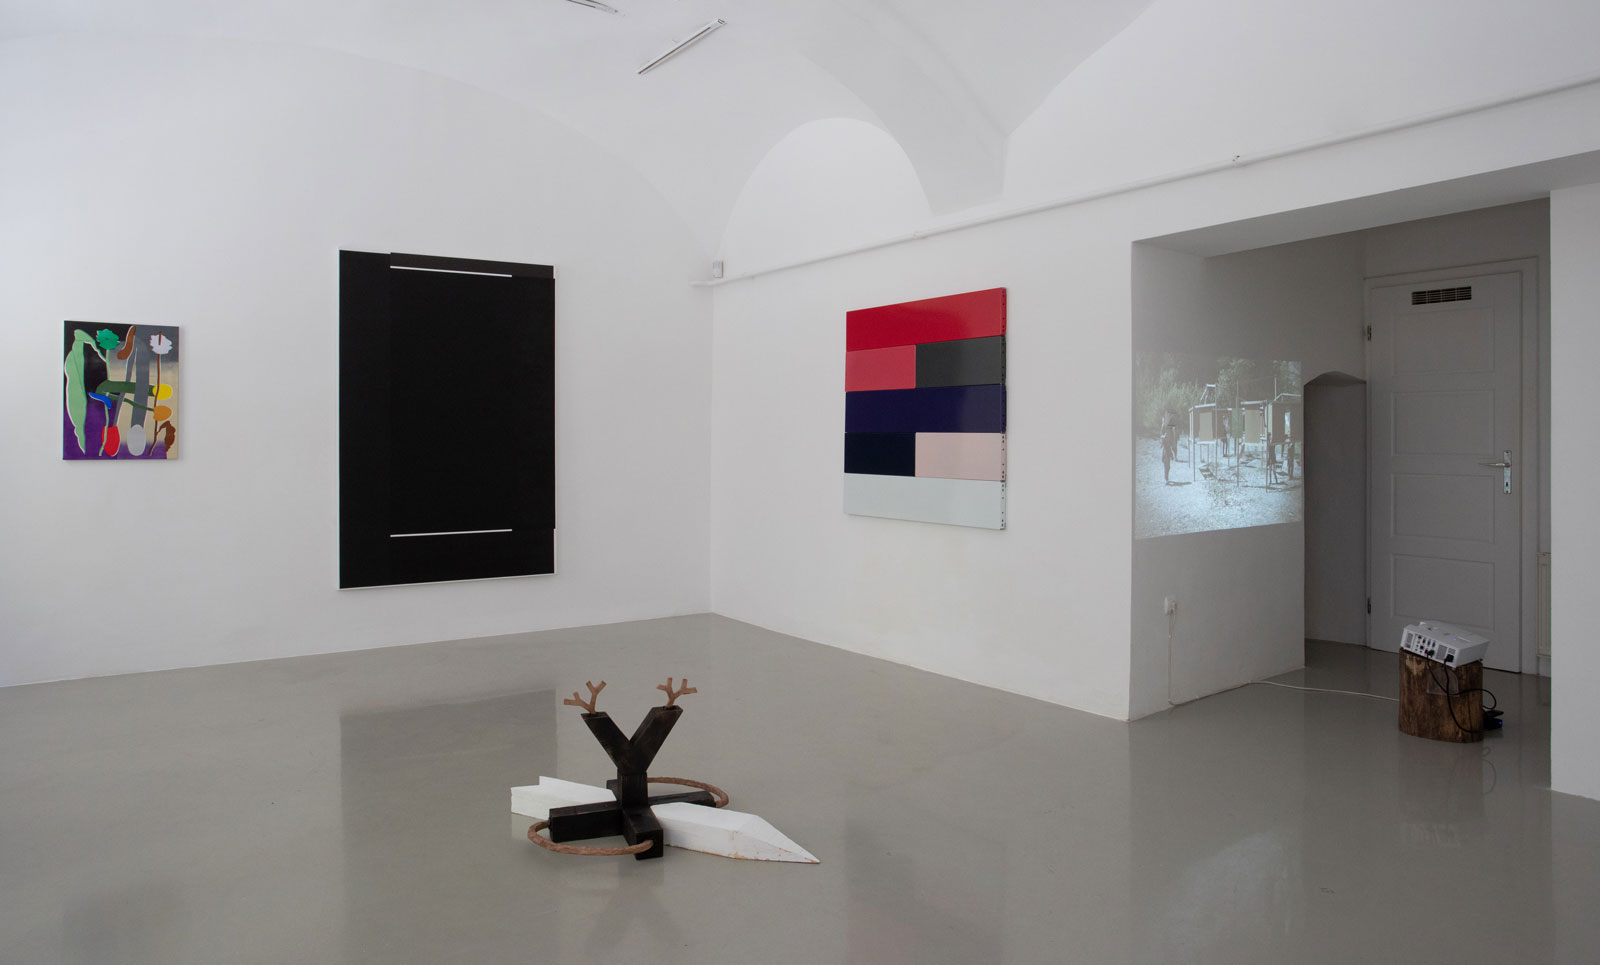 Listing VIII, exhibition view, 2019
Works by Gergő Szinyova, János Sugár, Gábor Kristóf, Tamás Kaszás